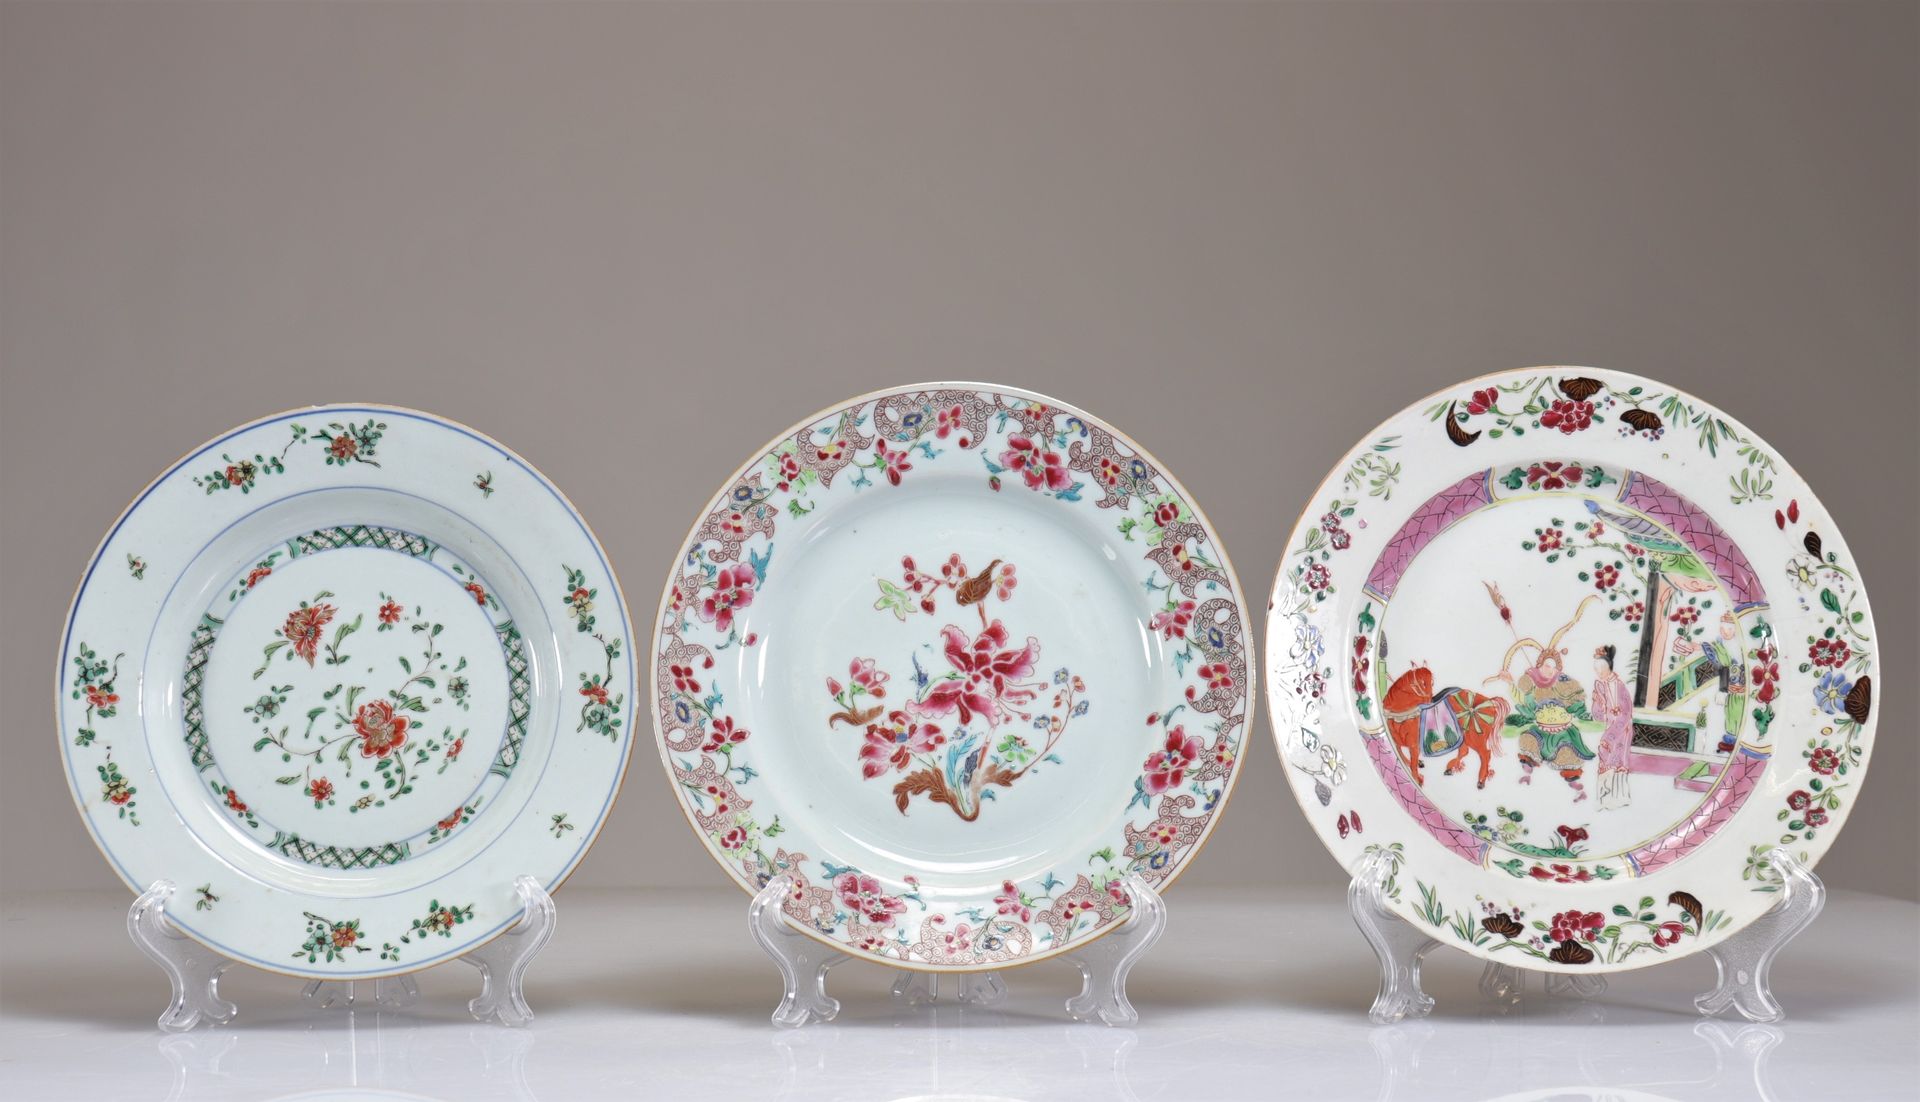 Null Platos (3) porcelana famille rose del siglo XVIII
peso: 990 g
Entrega dispo&hellip;